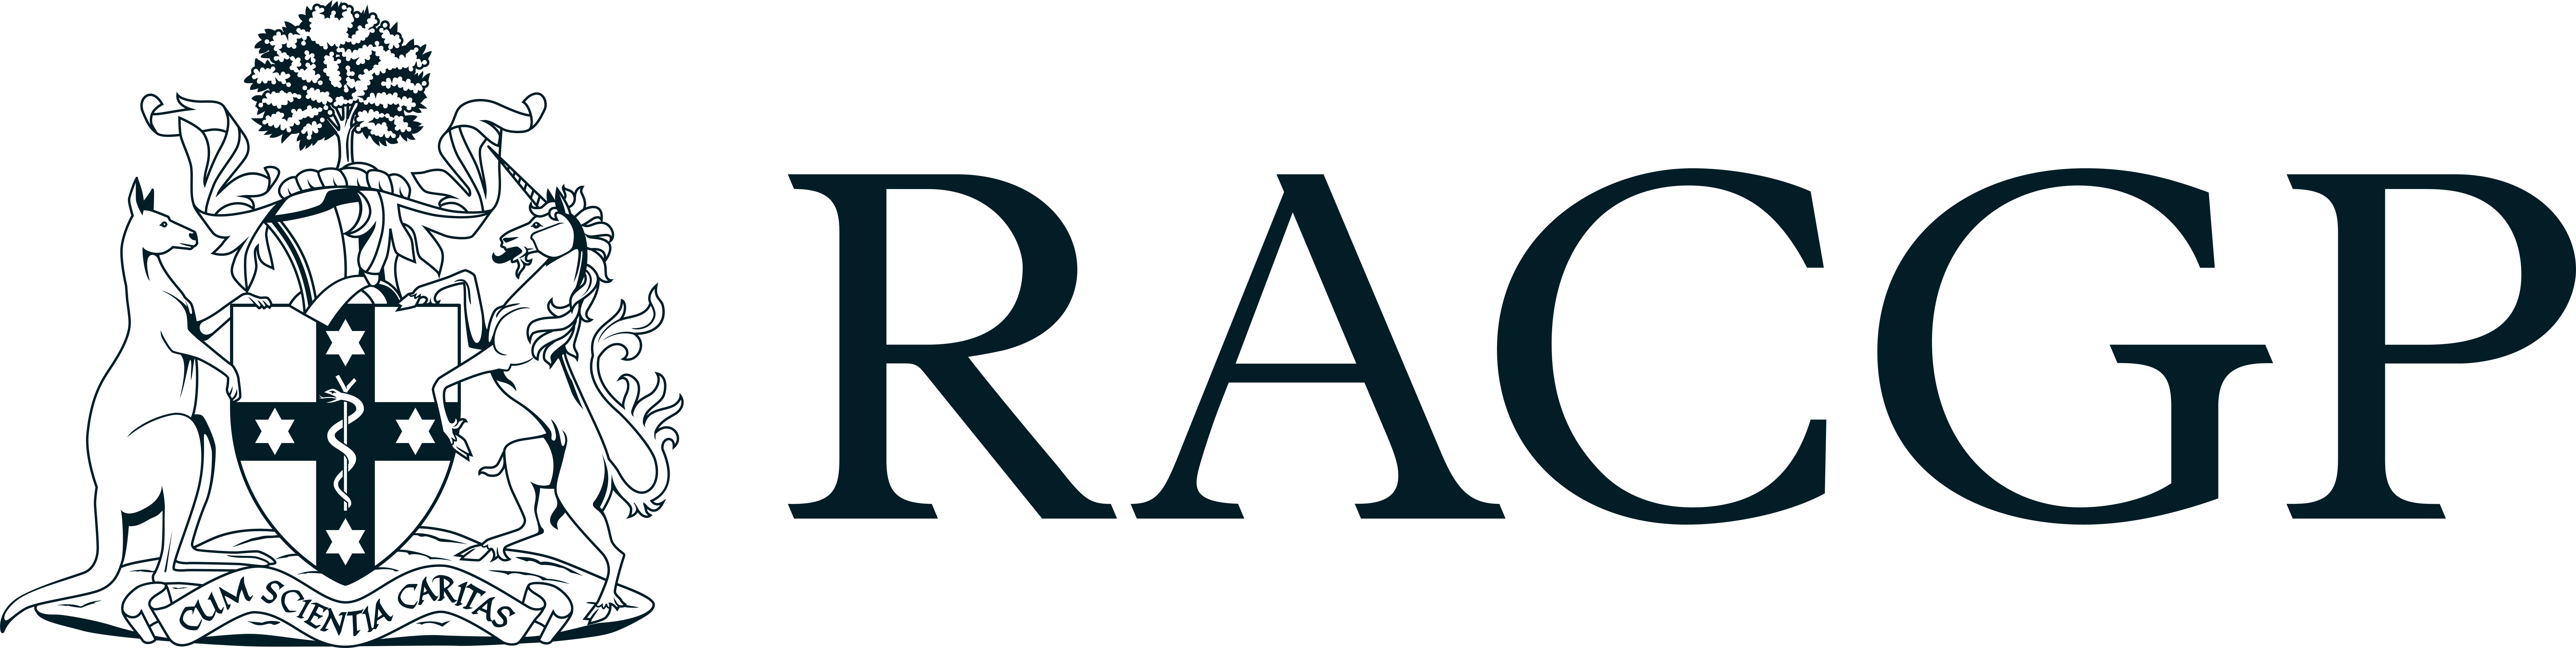 RACGP_logo